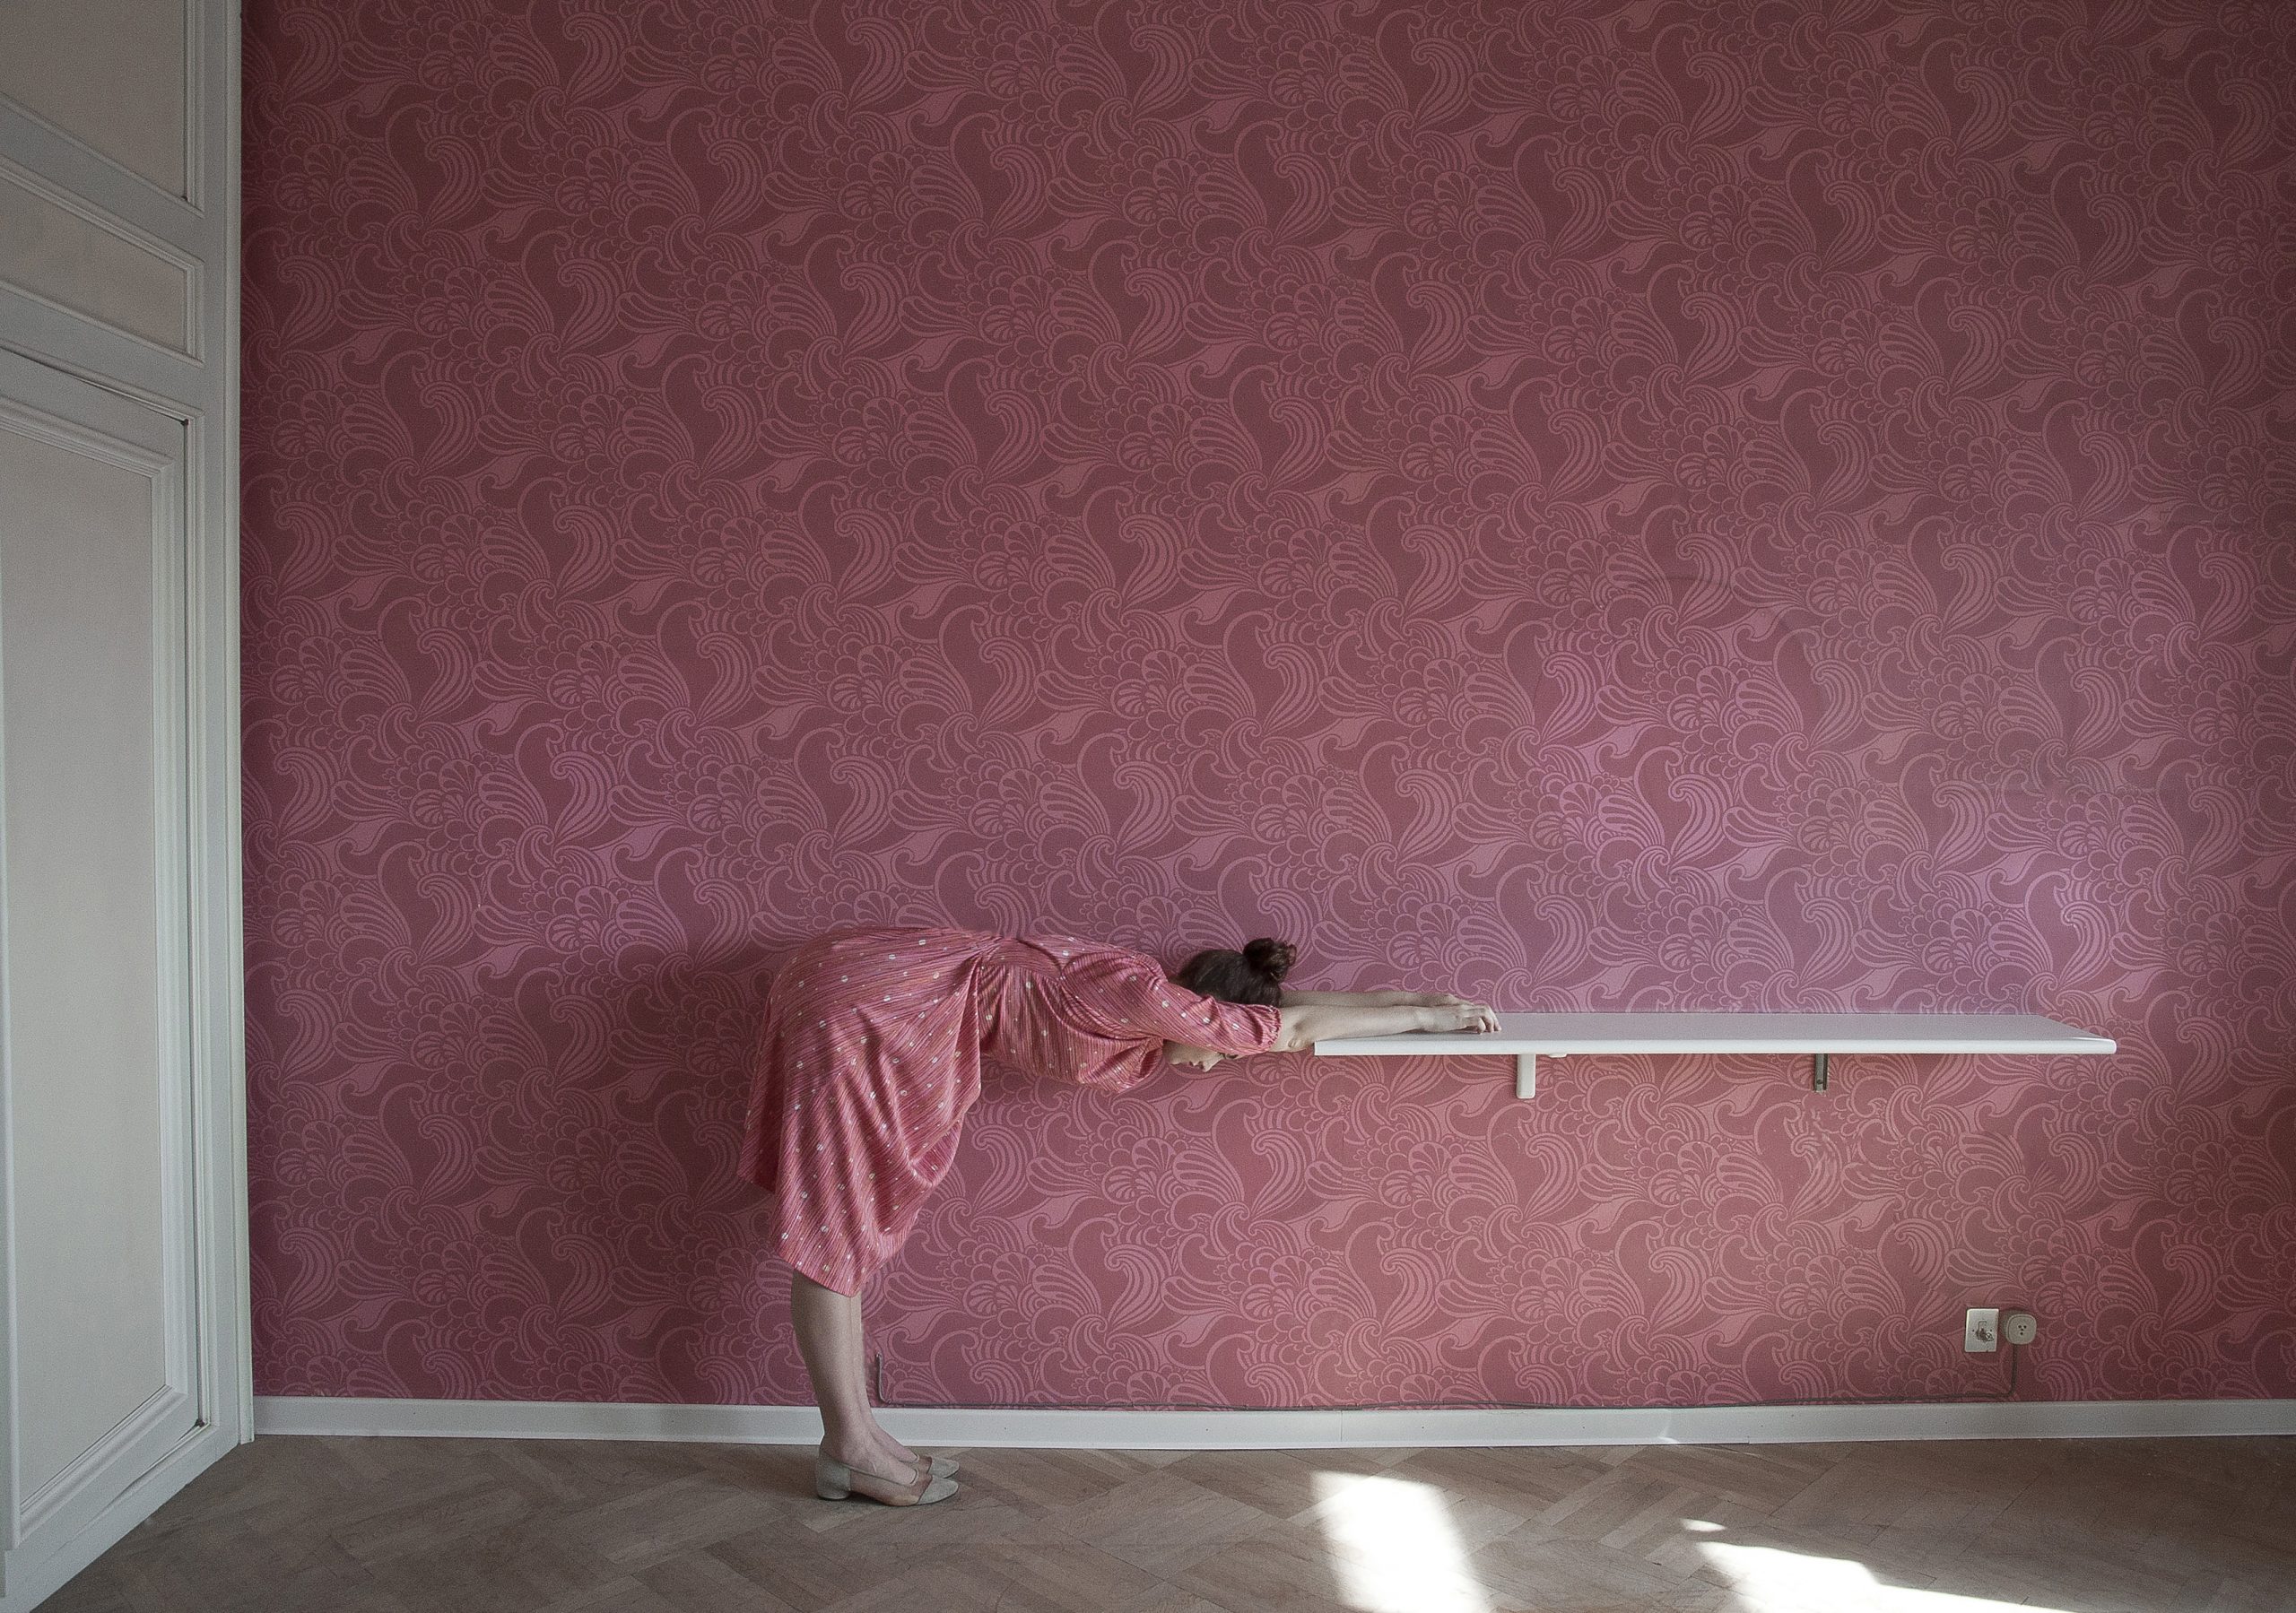     Cristina Coral, Pink Room, 2016

